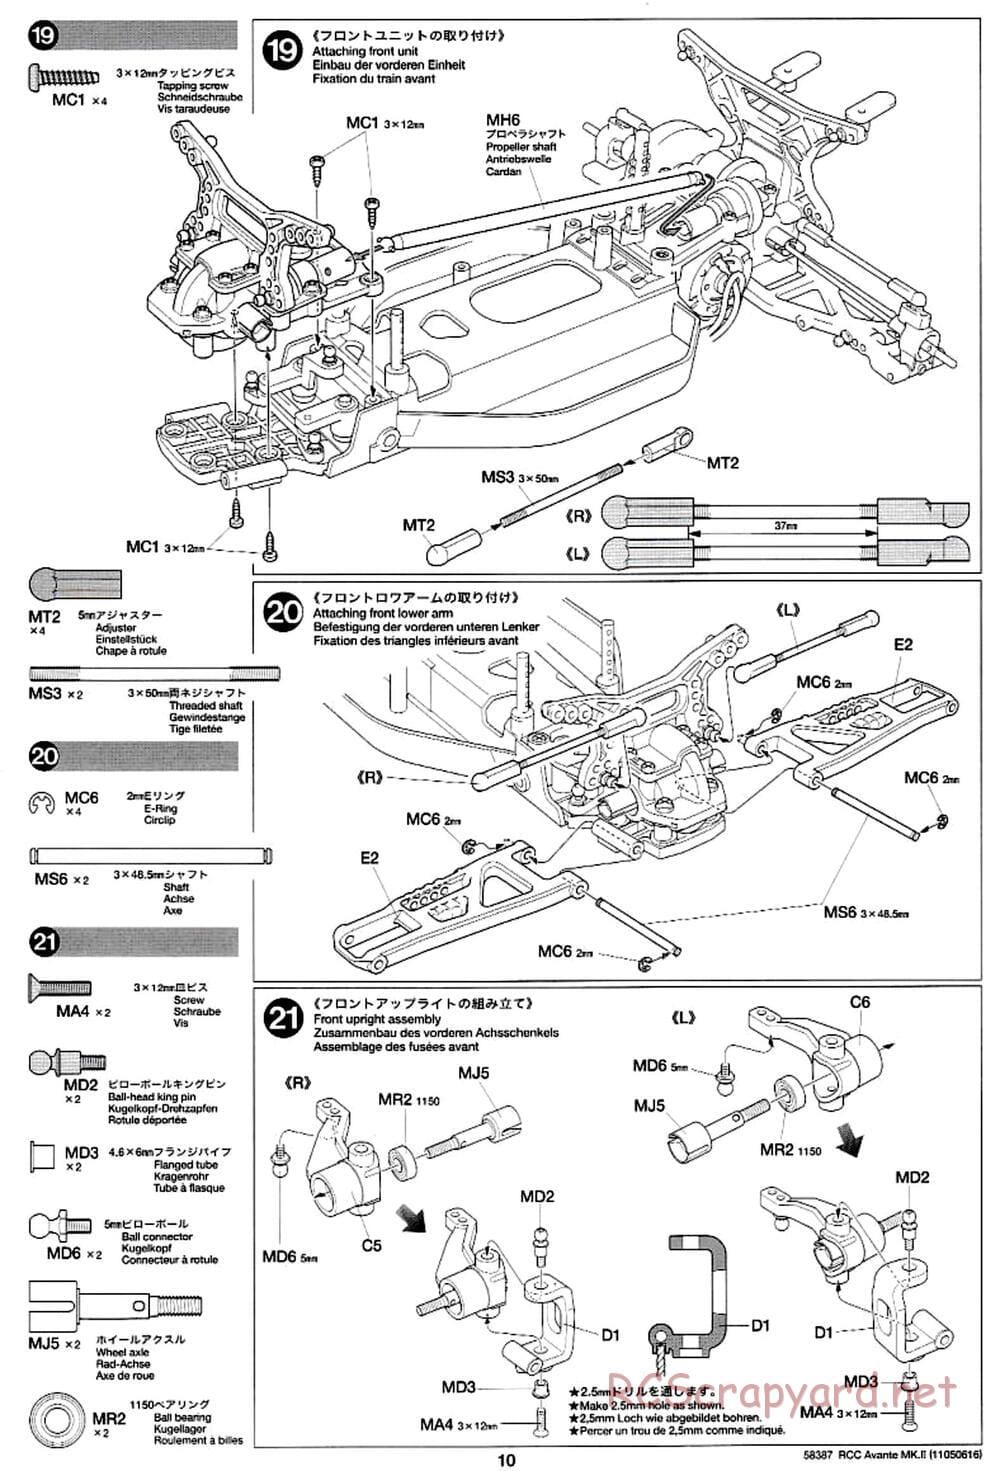 Tamiya - Avante Mk.II Chassis - Manual - Page 10